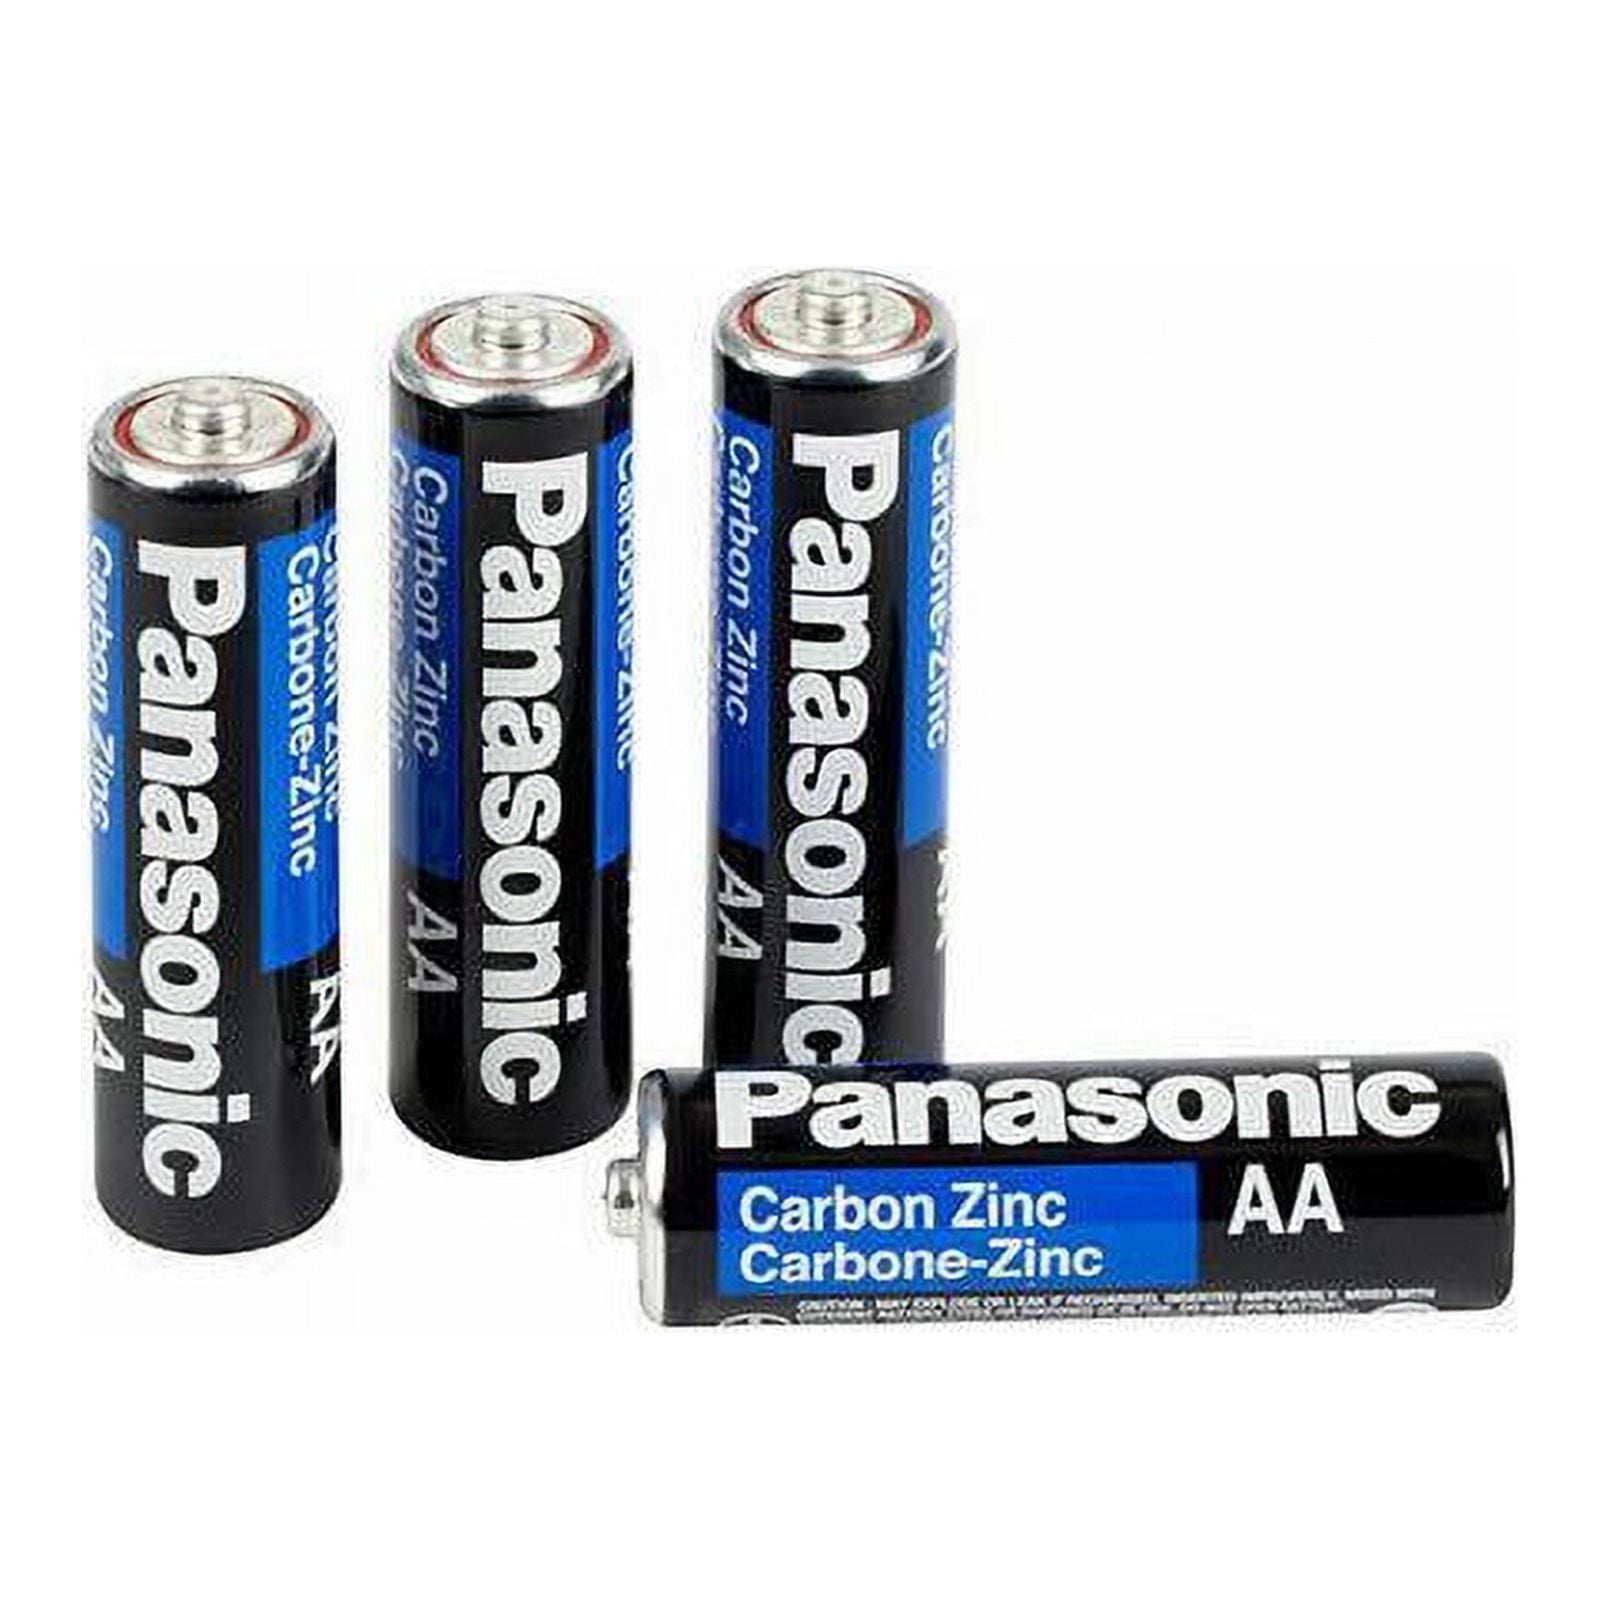 16 PCS Panasonic AA Batteries Super Heavy Duty Power Carbon Zinc Double A  Battery 1.5v 